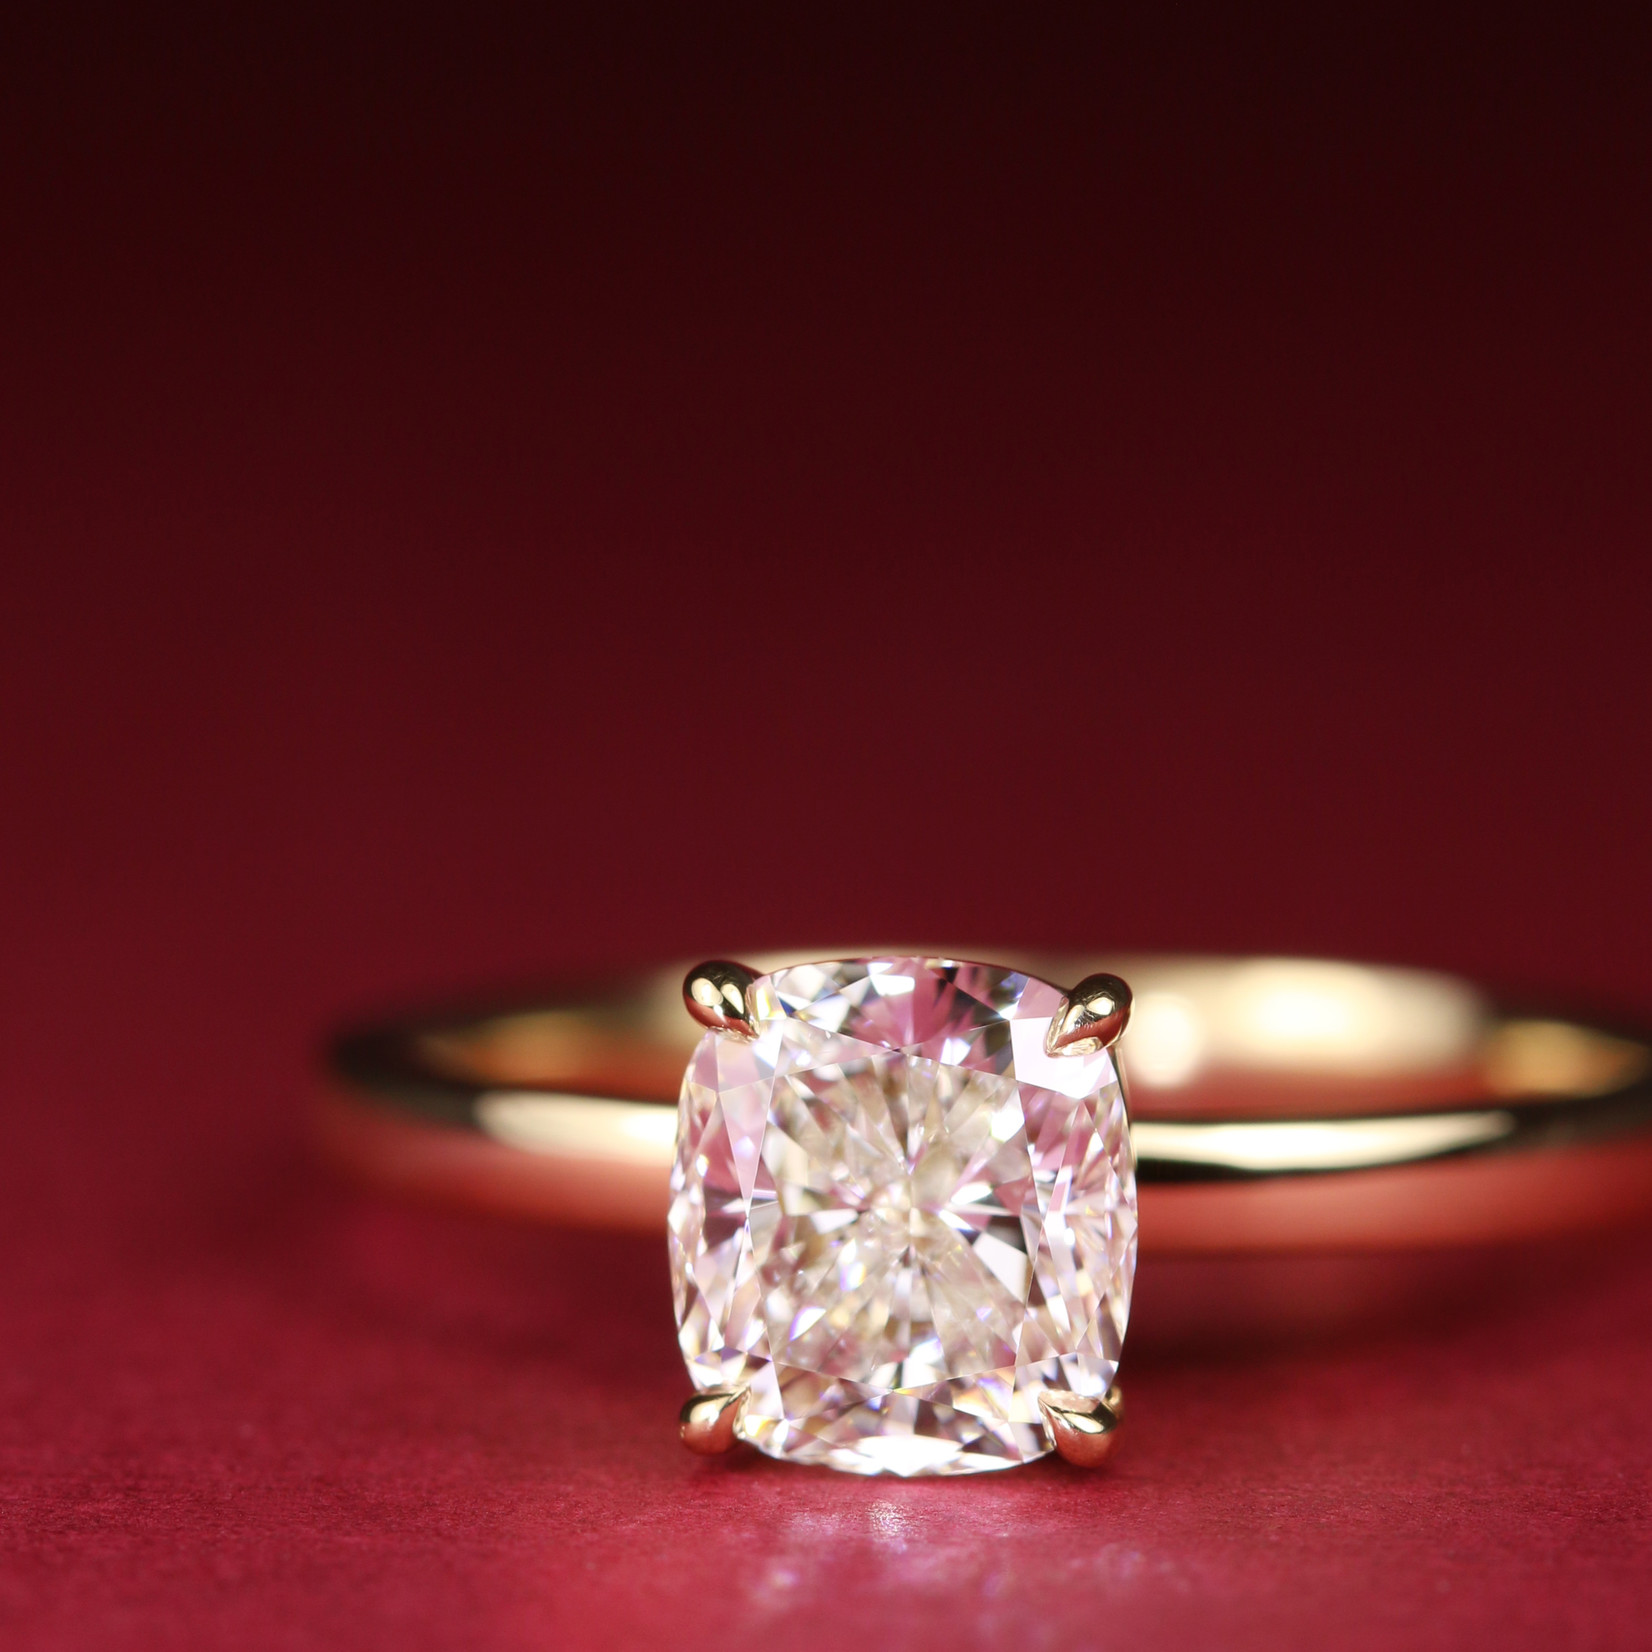 Baxter Moerman Chelsea Engagment Ring - Cushion Diamond